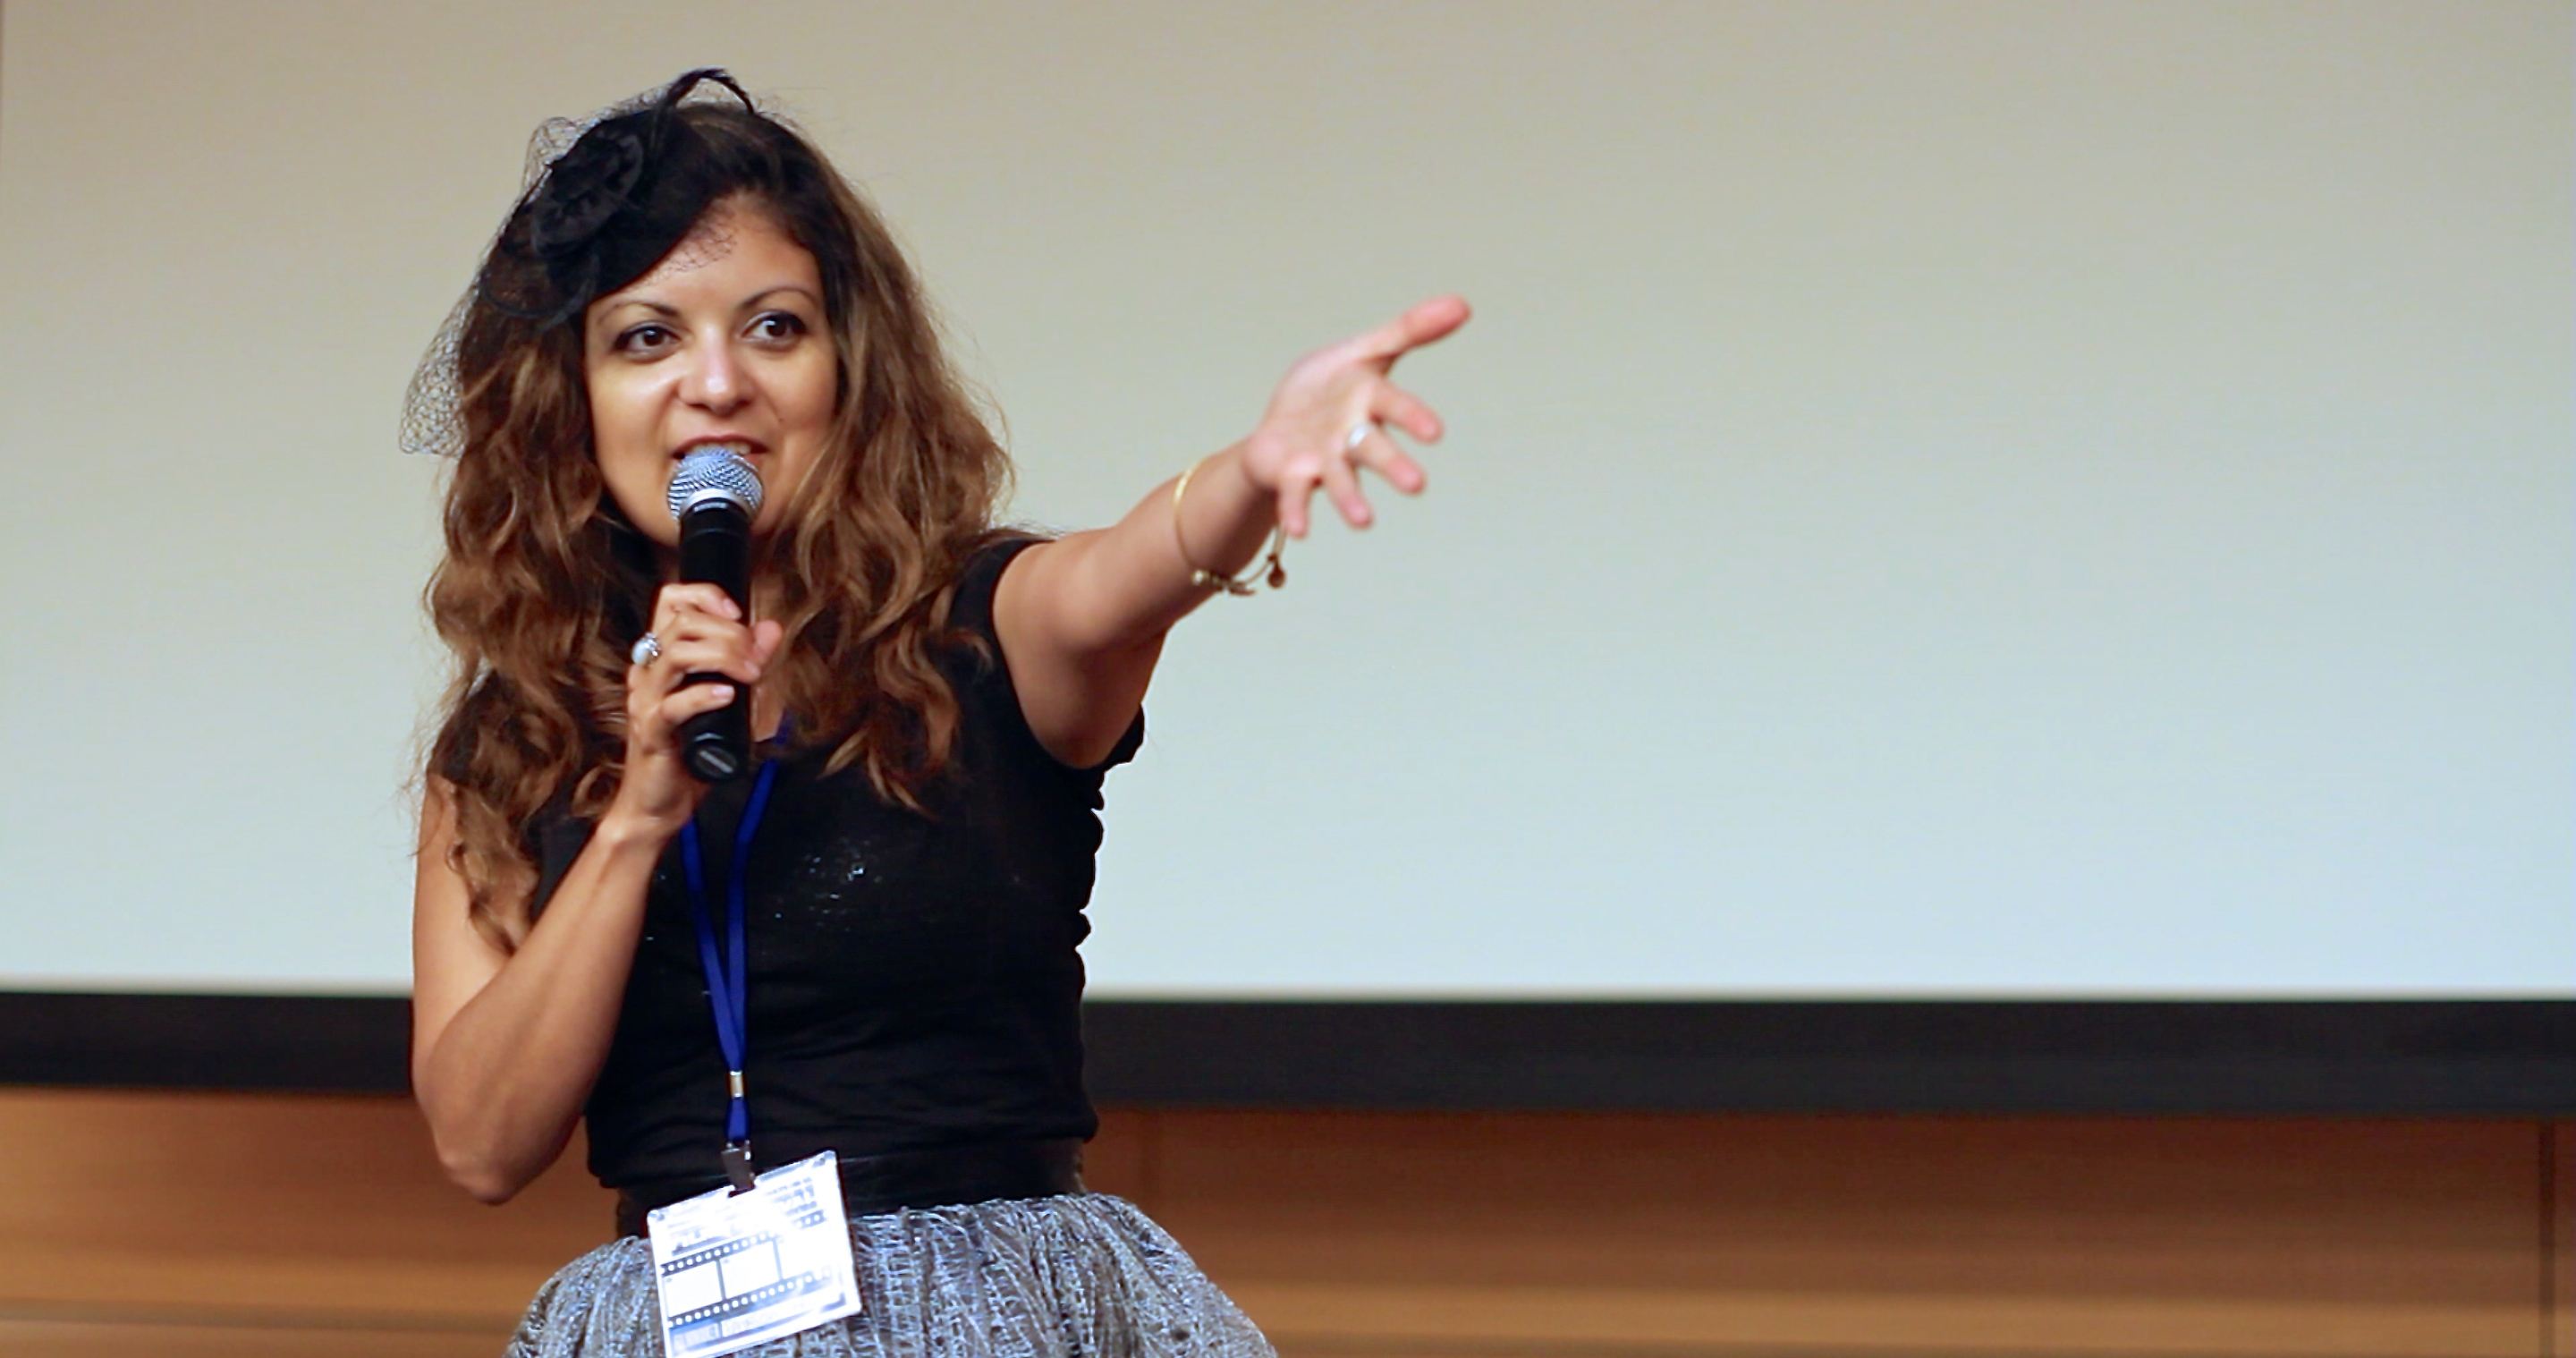 Speaking at the Rhode Island International Film Festival 2014